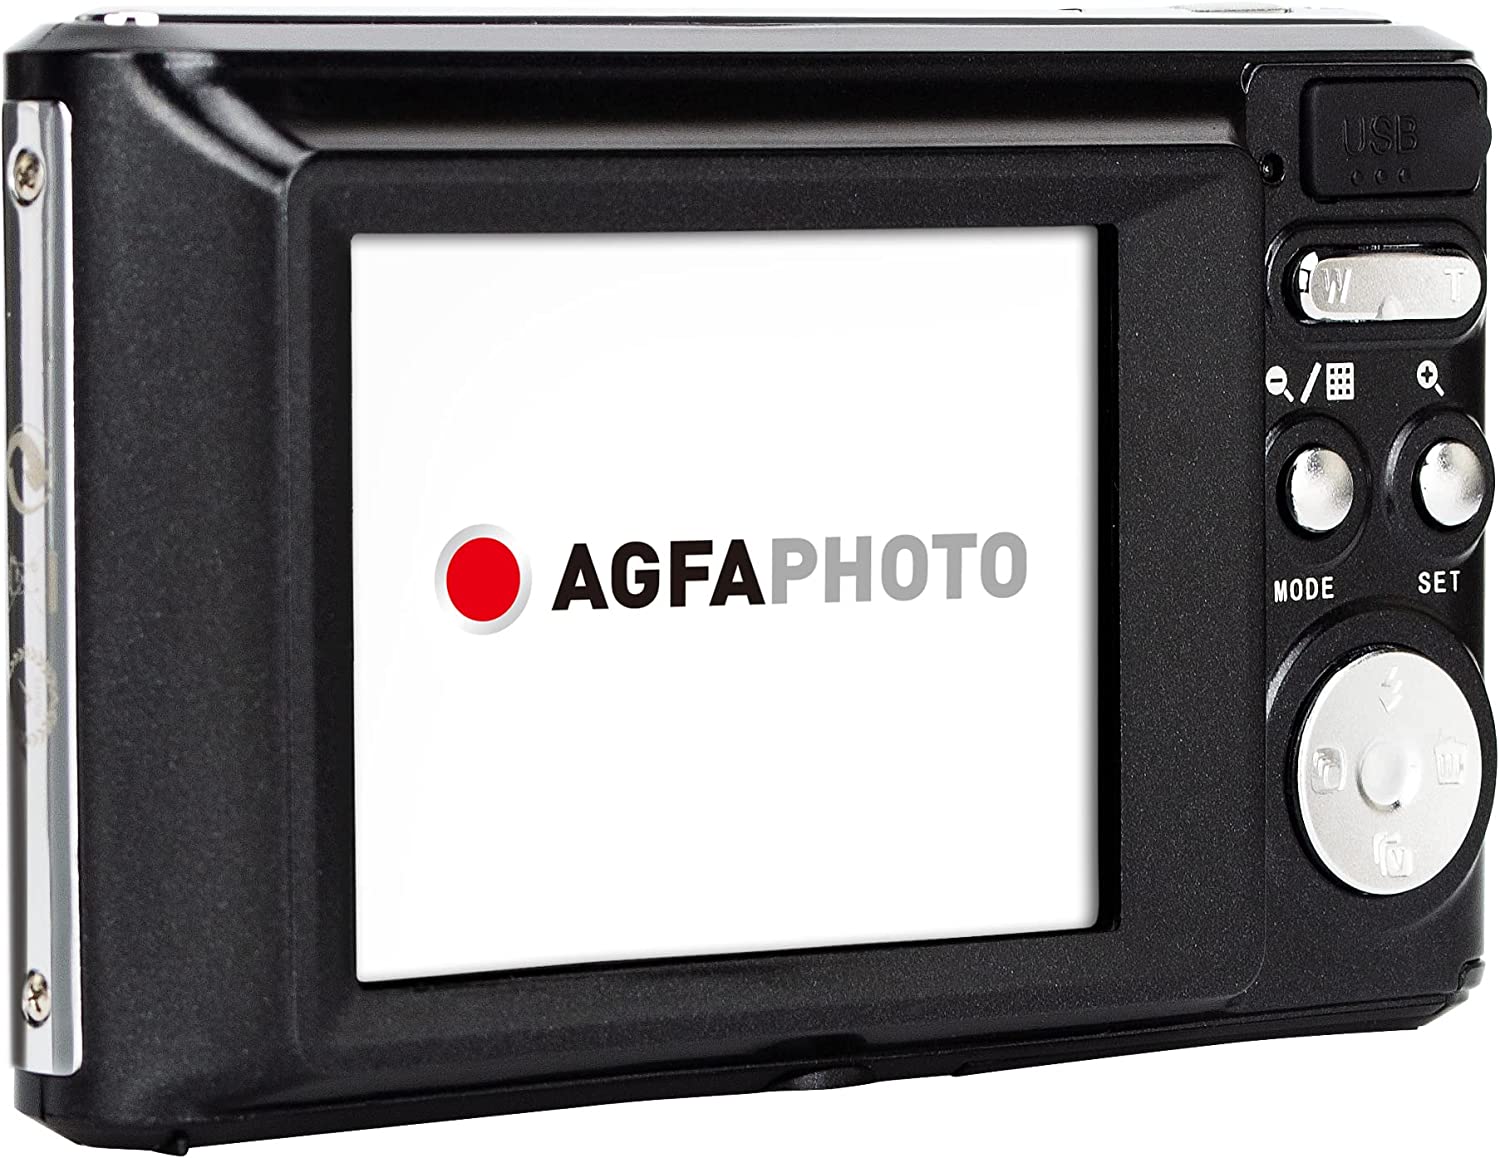 Agfa Photo Realishot DC5500 Compact Digital Camera - Black